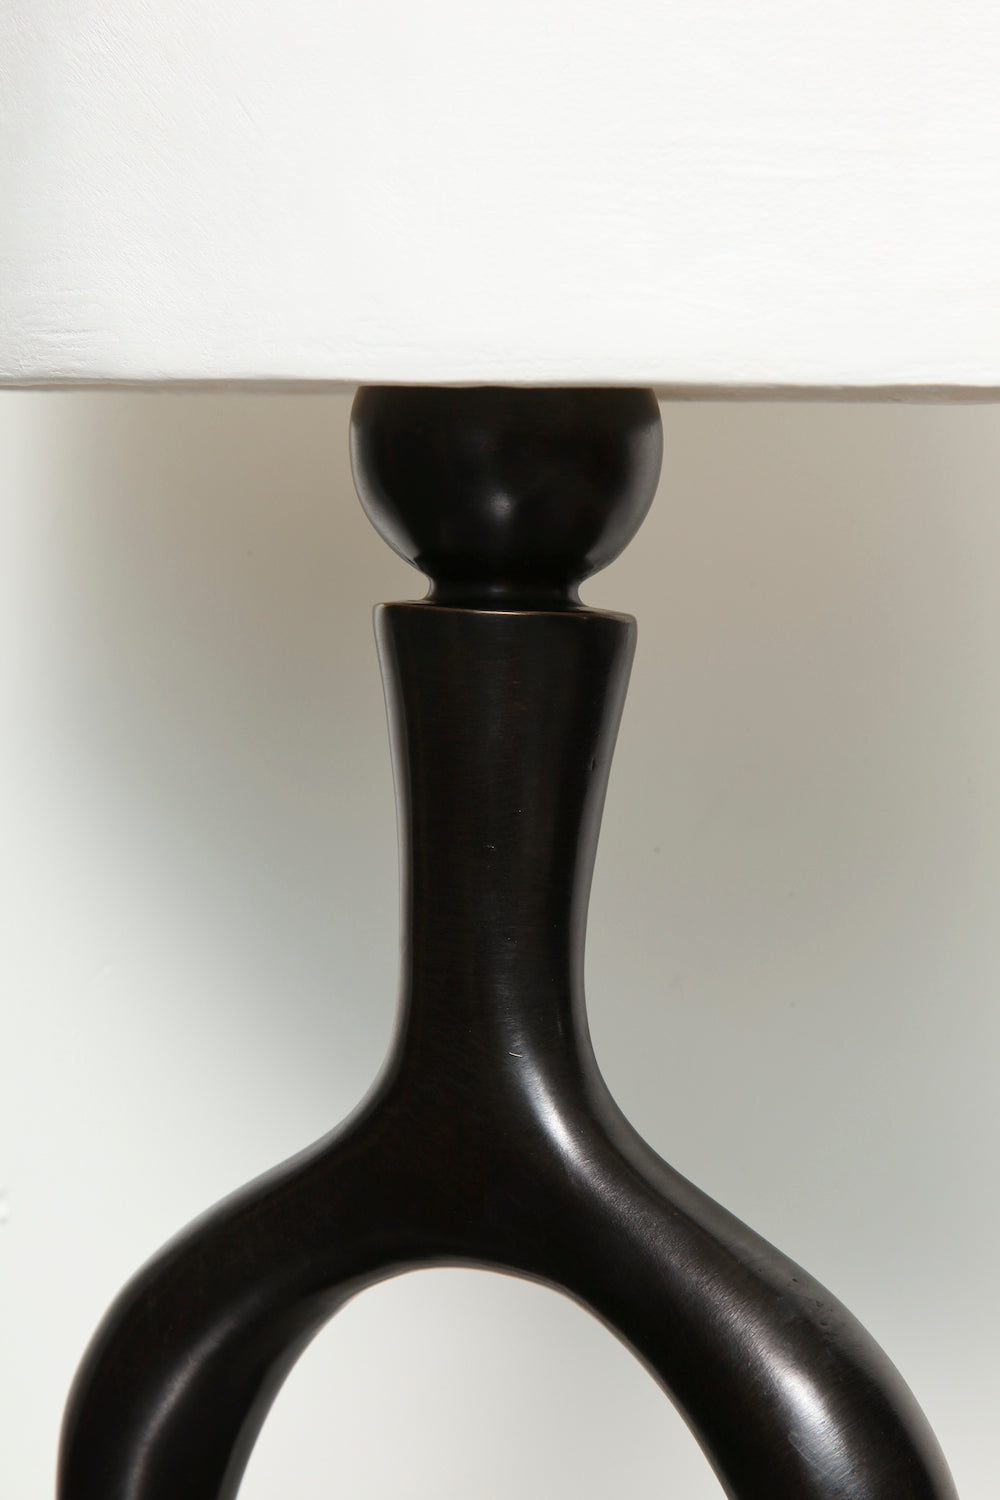 "Omega" Table Lamp by Alexandre Logé